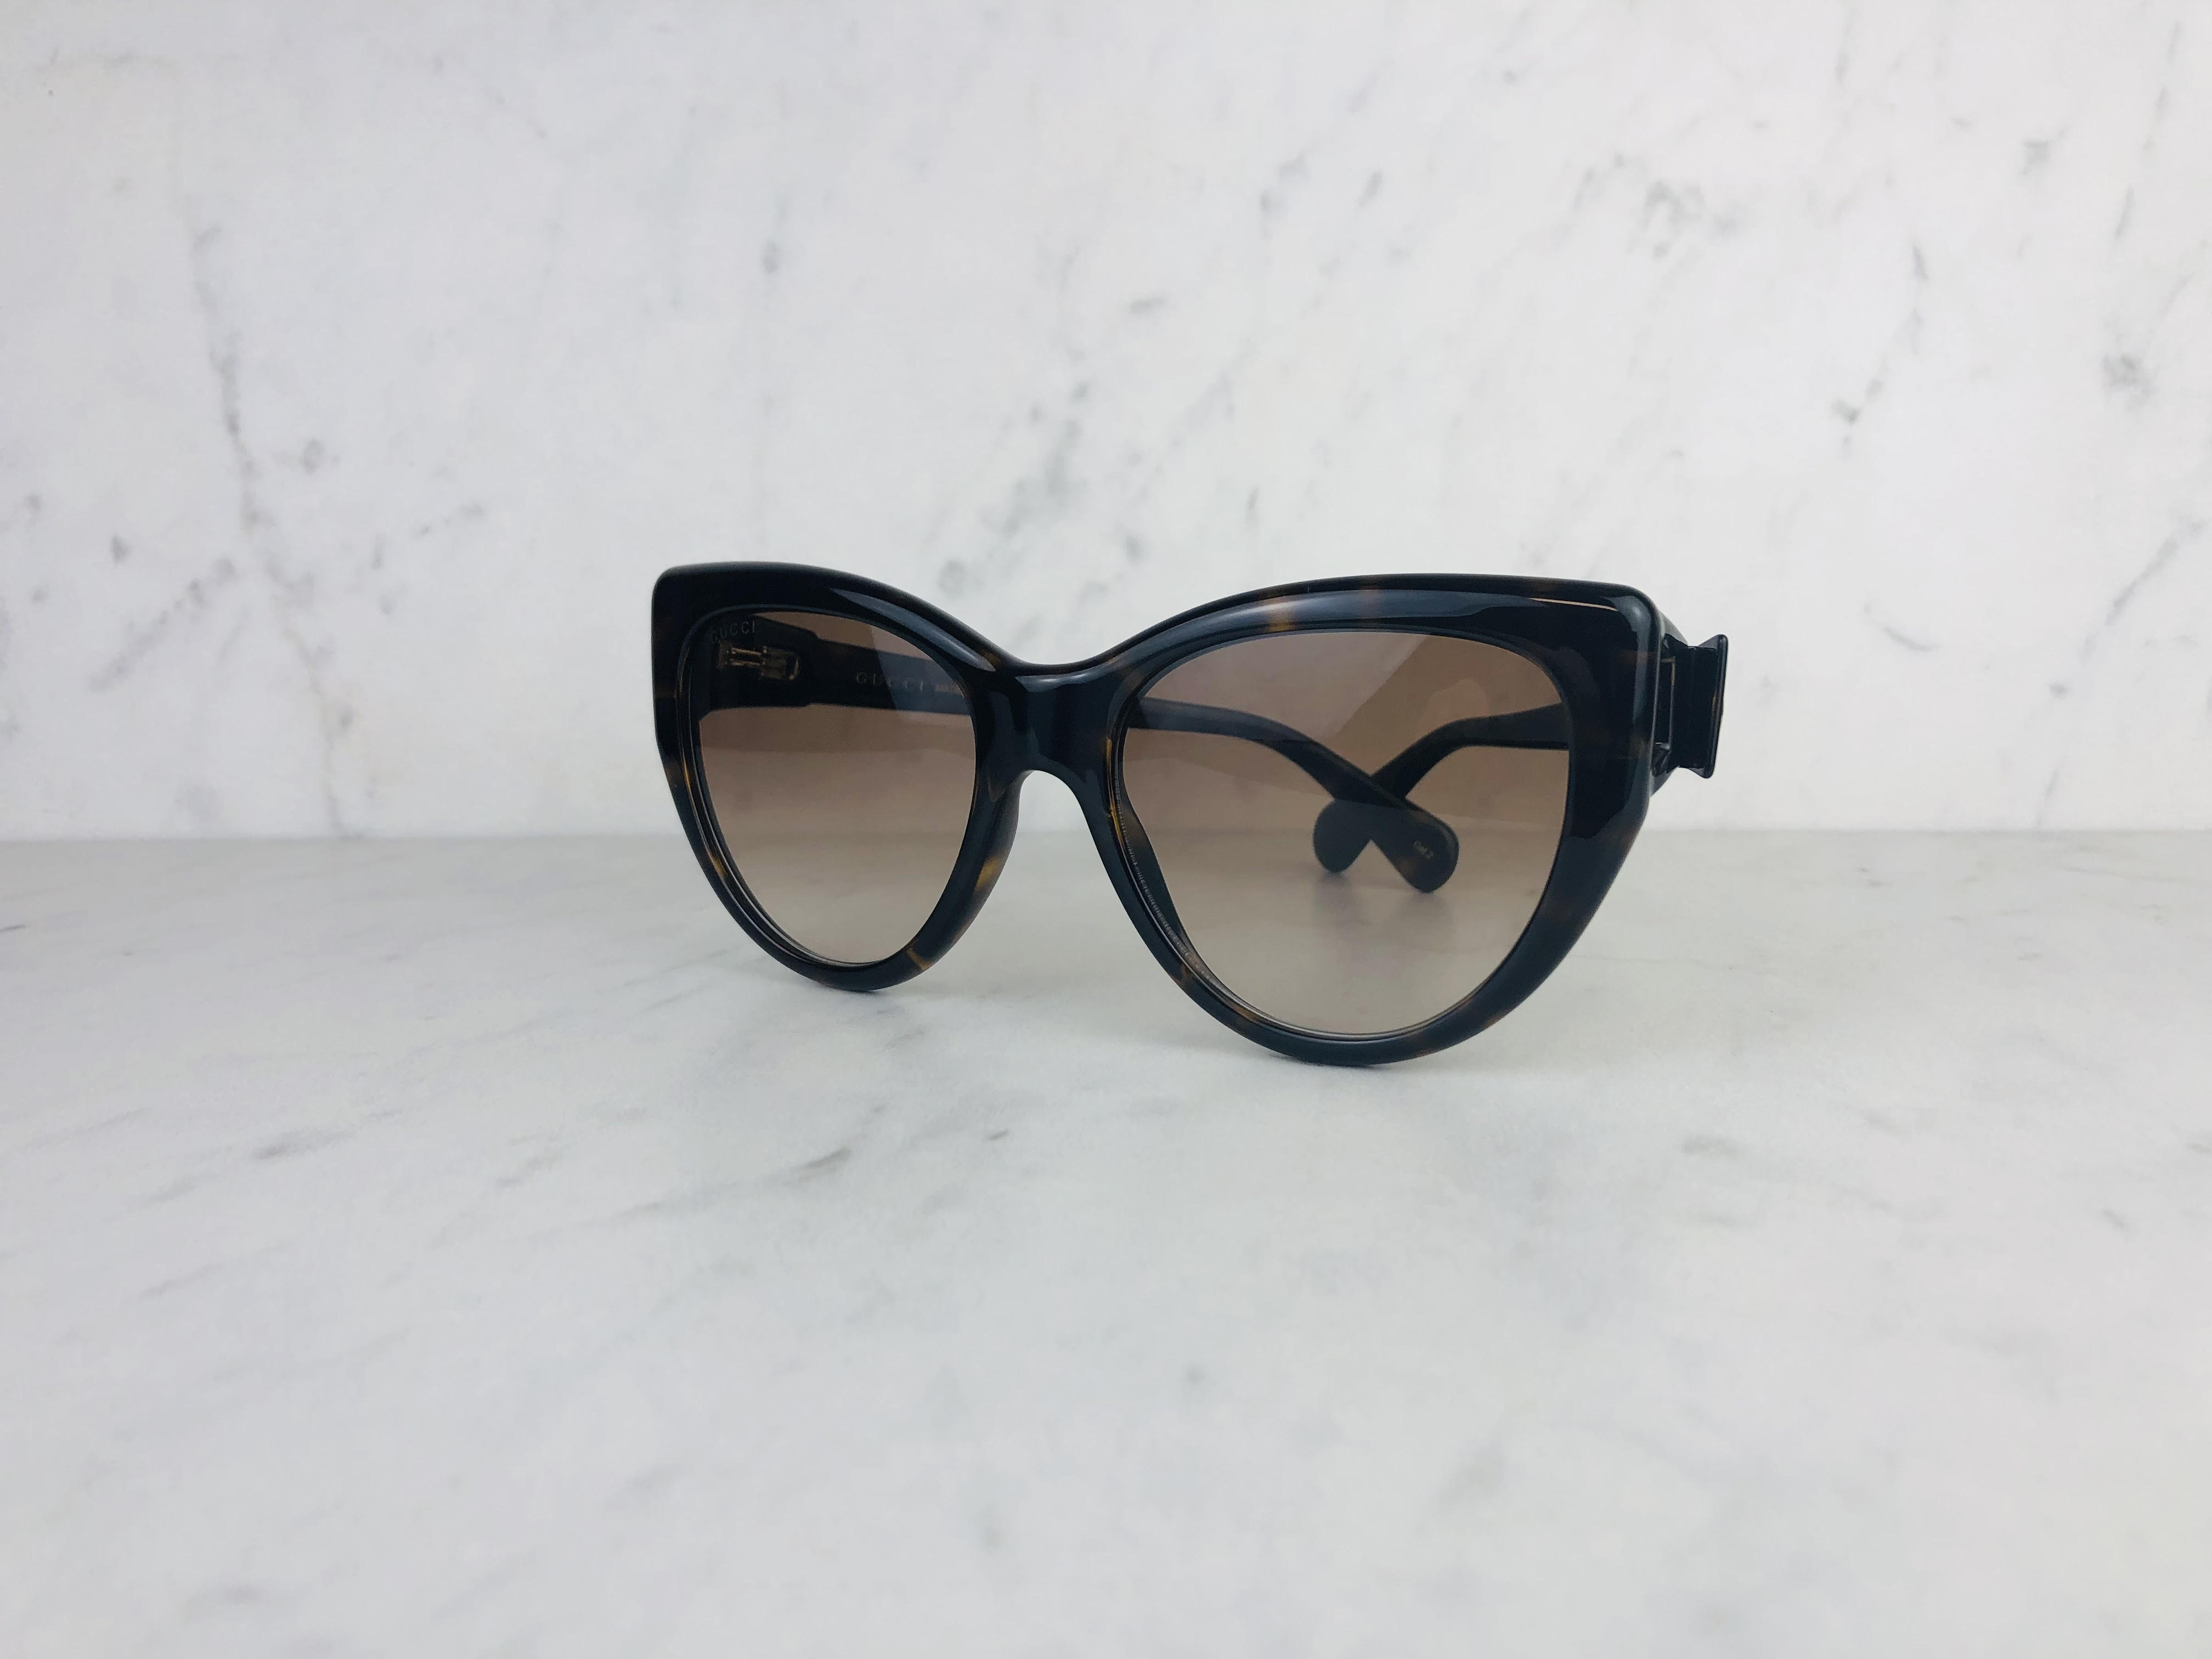 women's sunglasses tortoise color brand: Gucci, butterfly shape, non-rx able